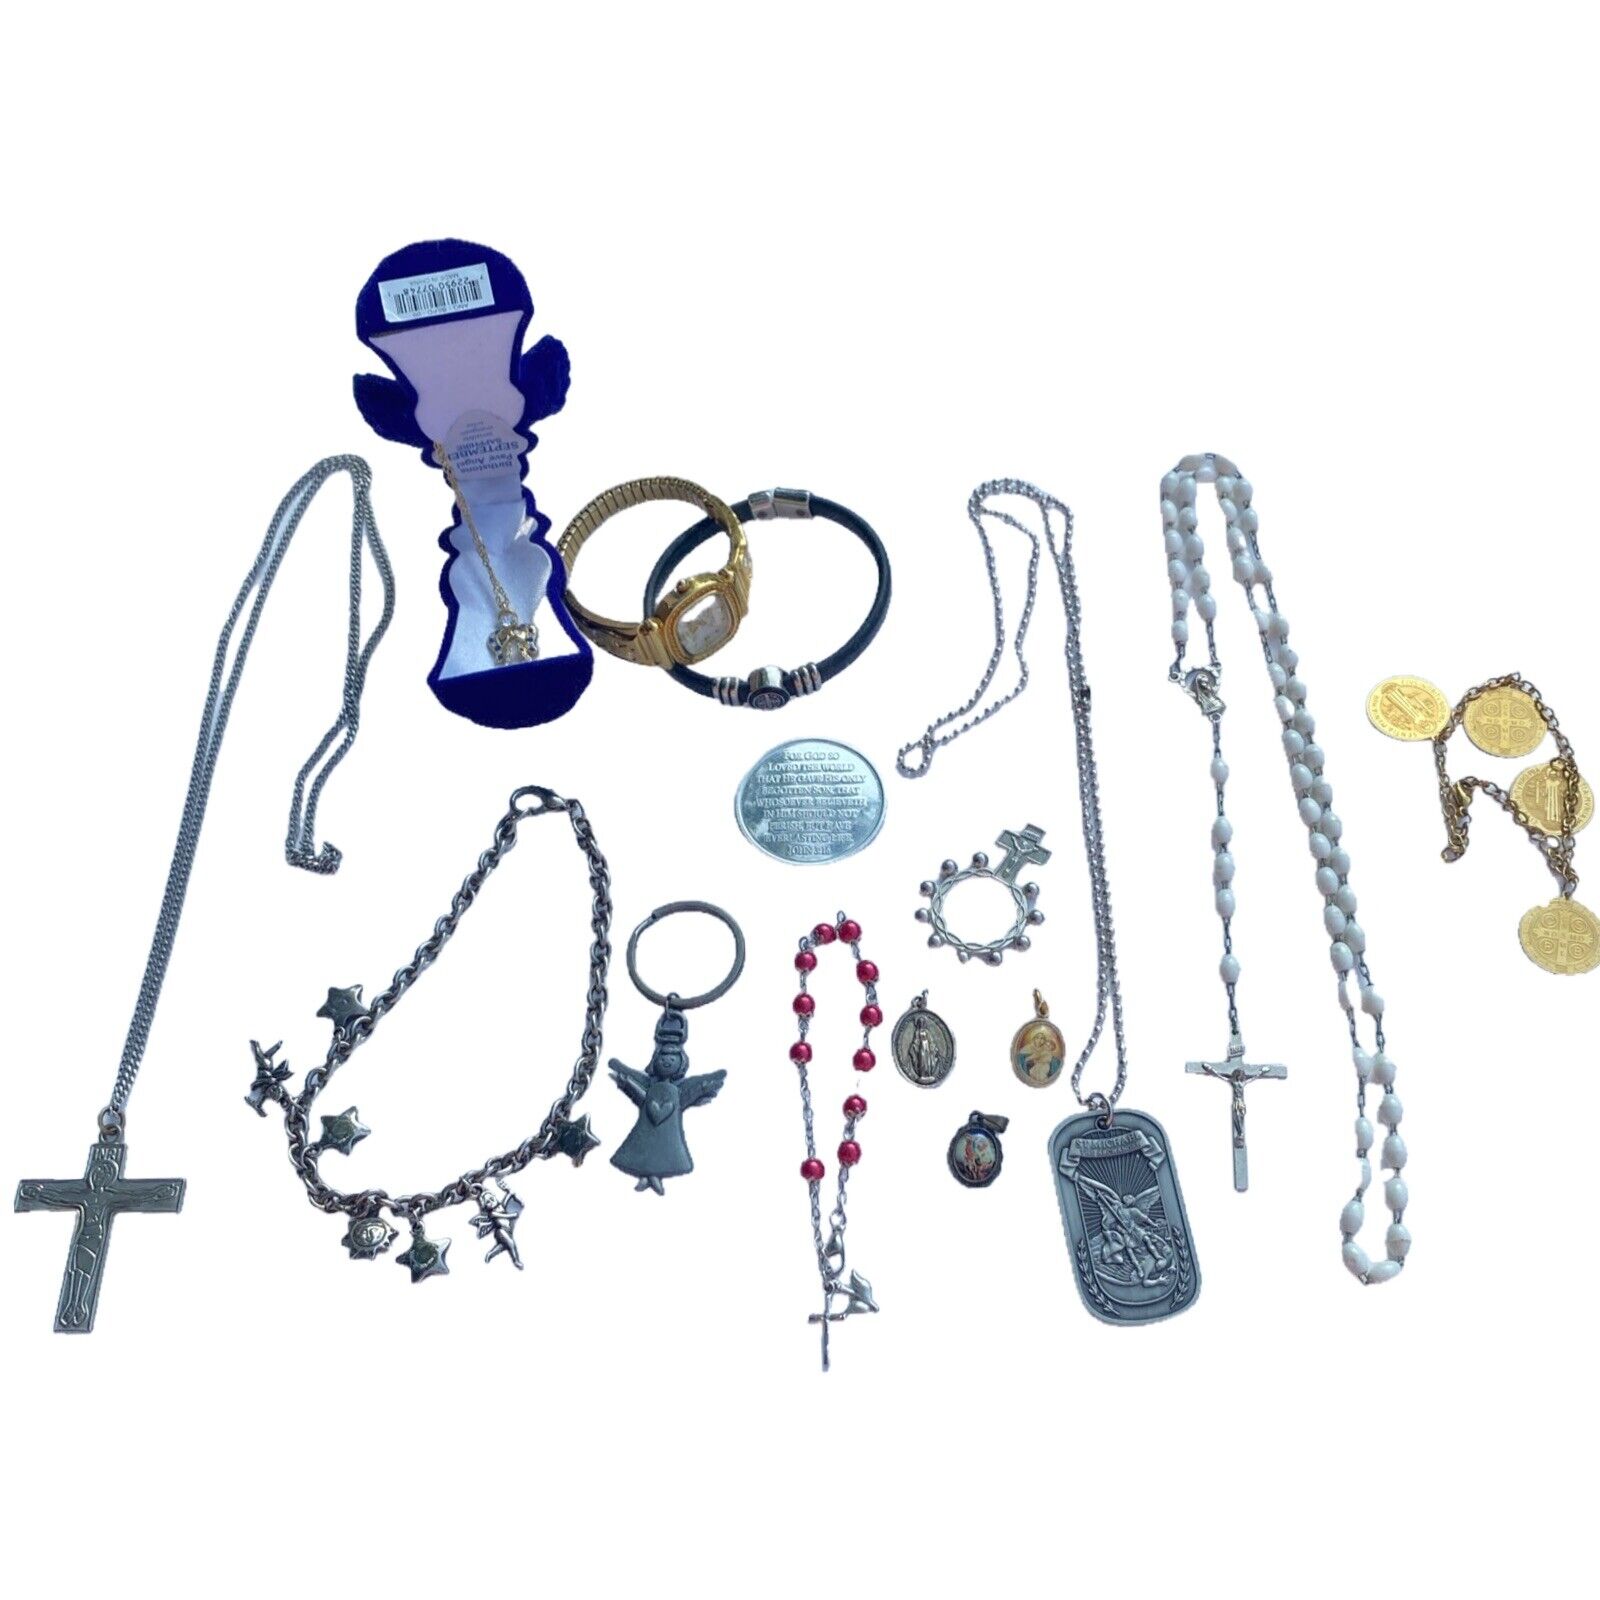 Vintage Catholic Rosary Metals Cross Jewelry Lot